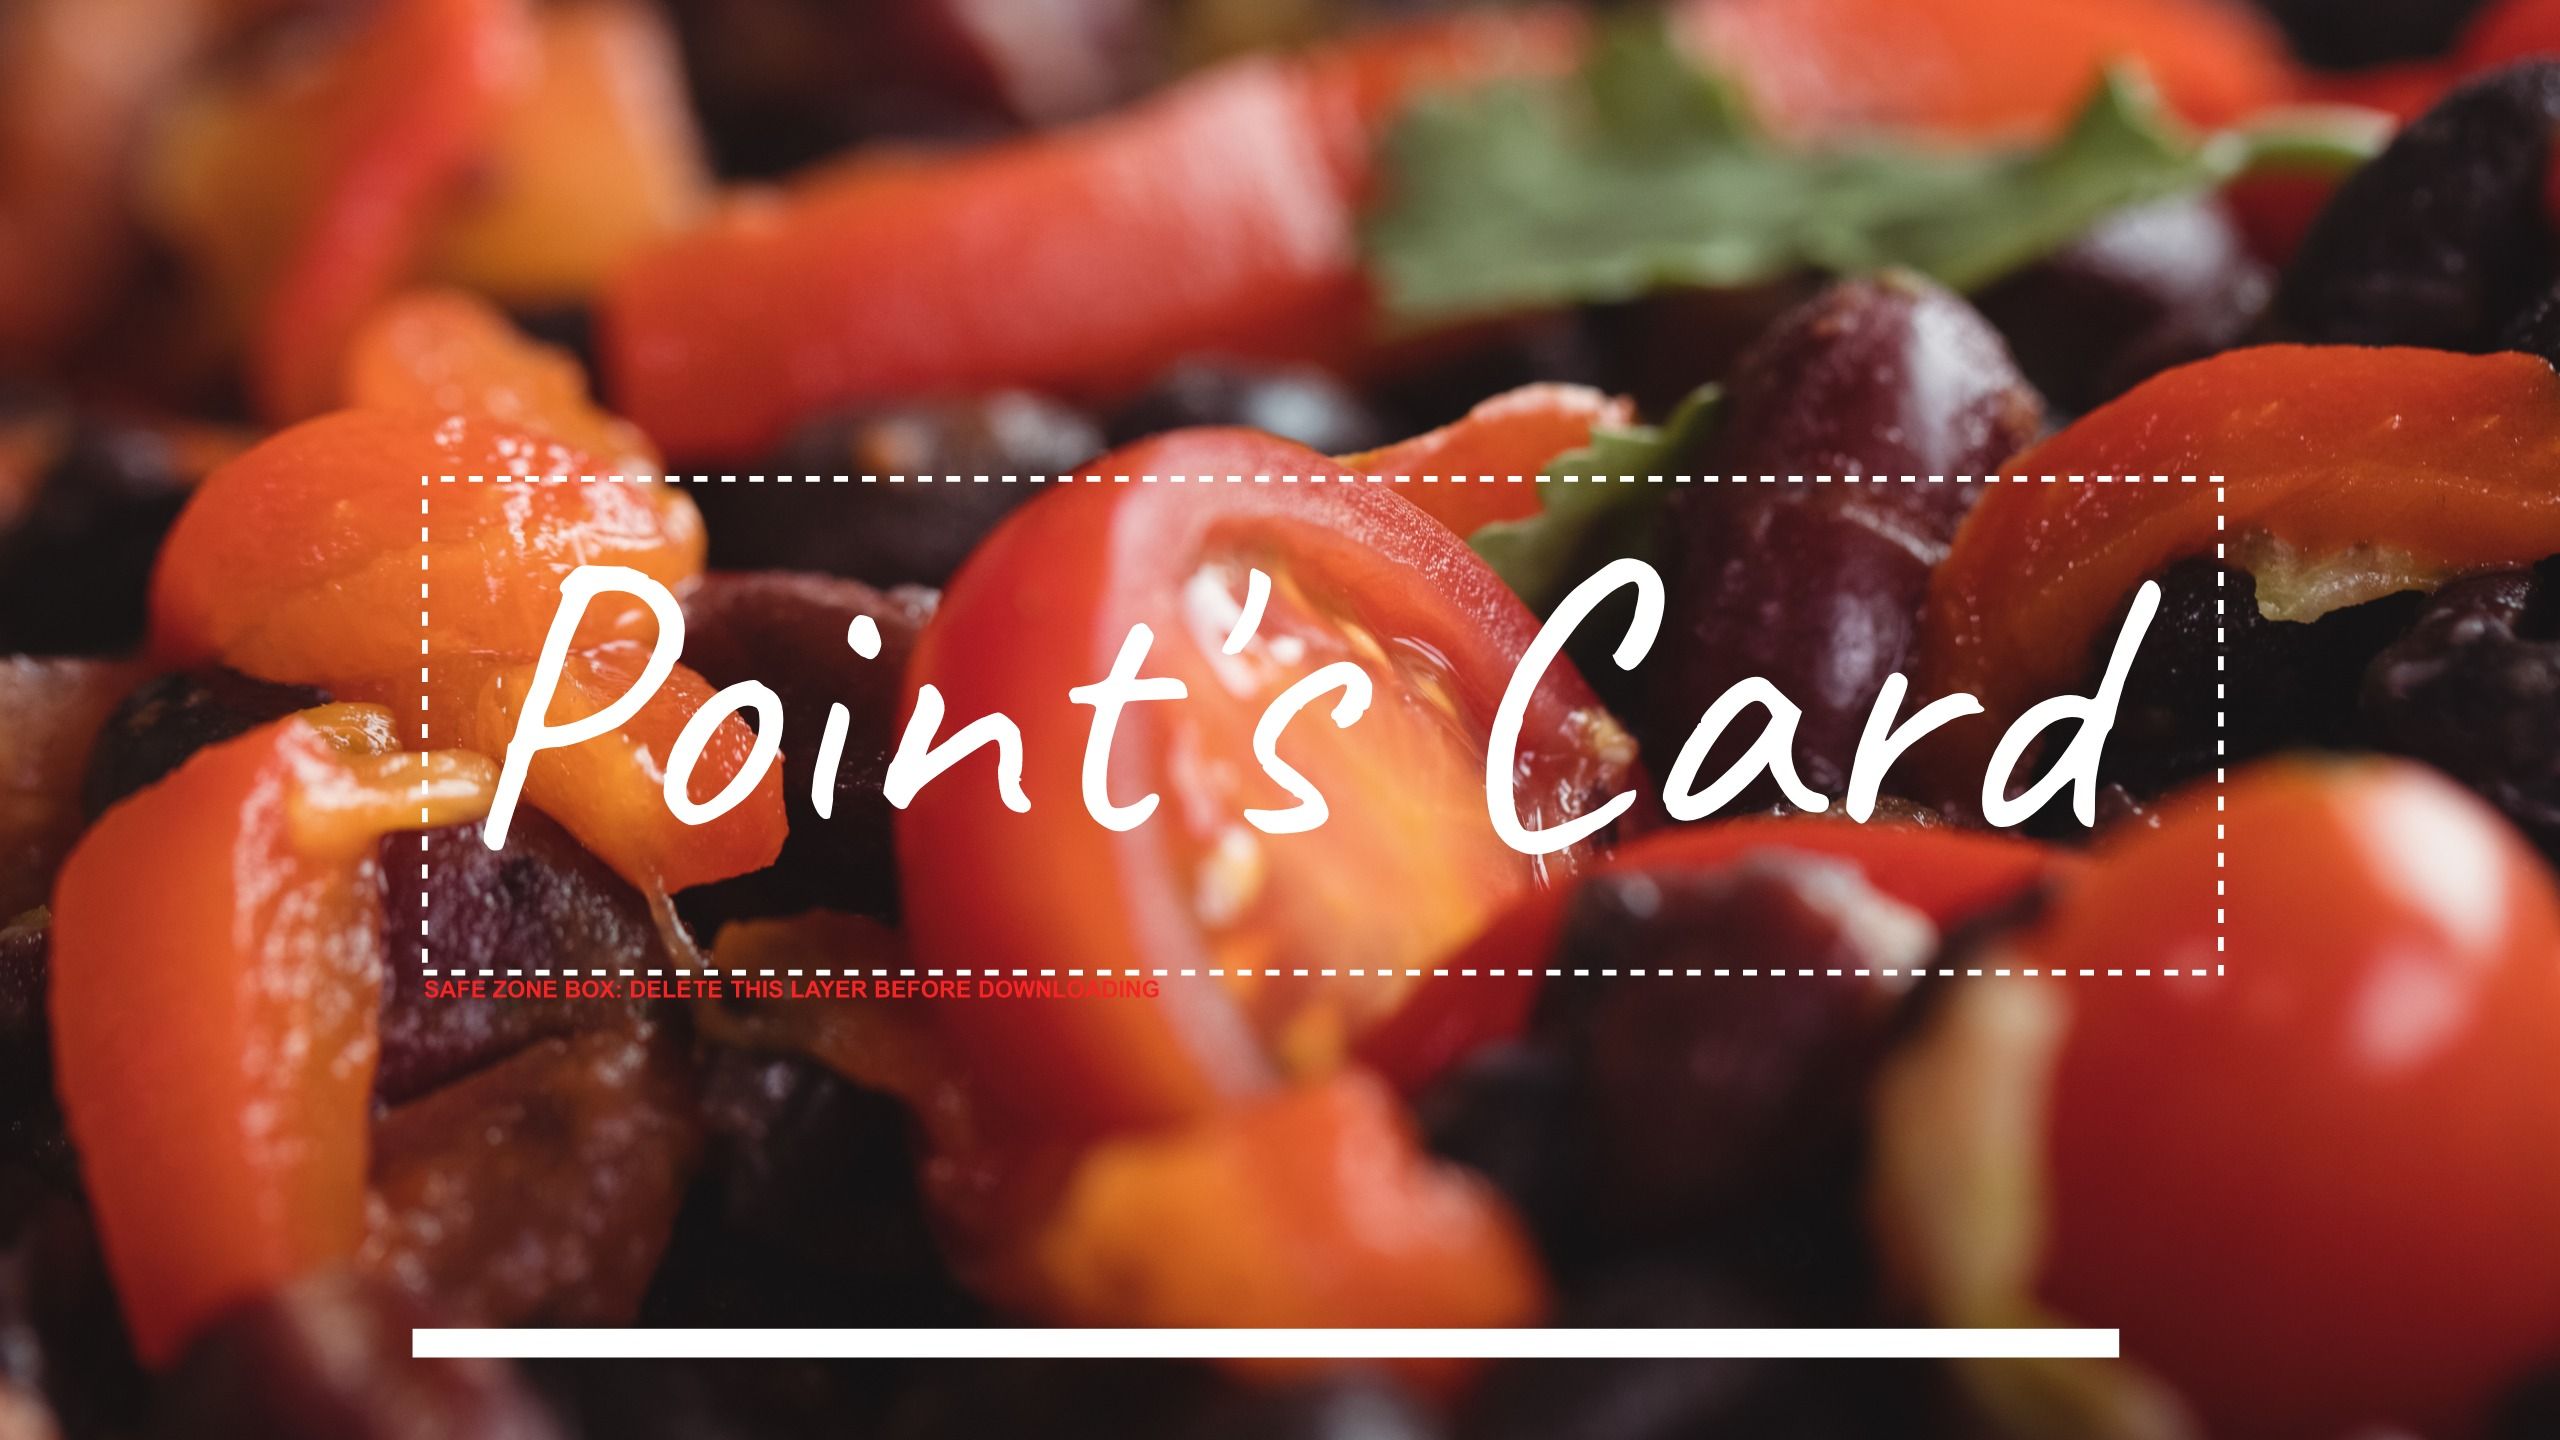 Points card - Customer Loyalty Program Ideas - Image